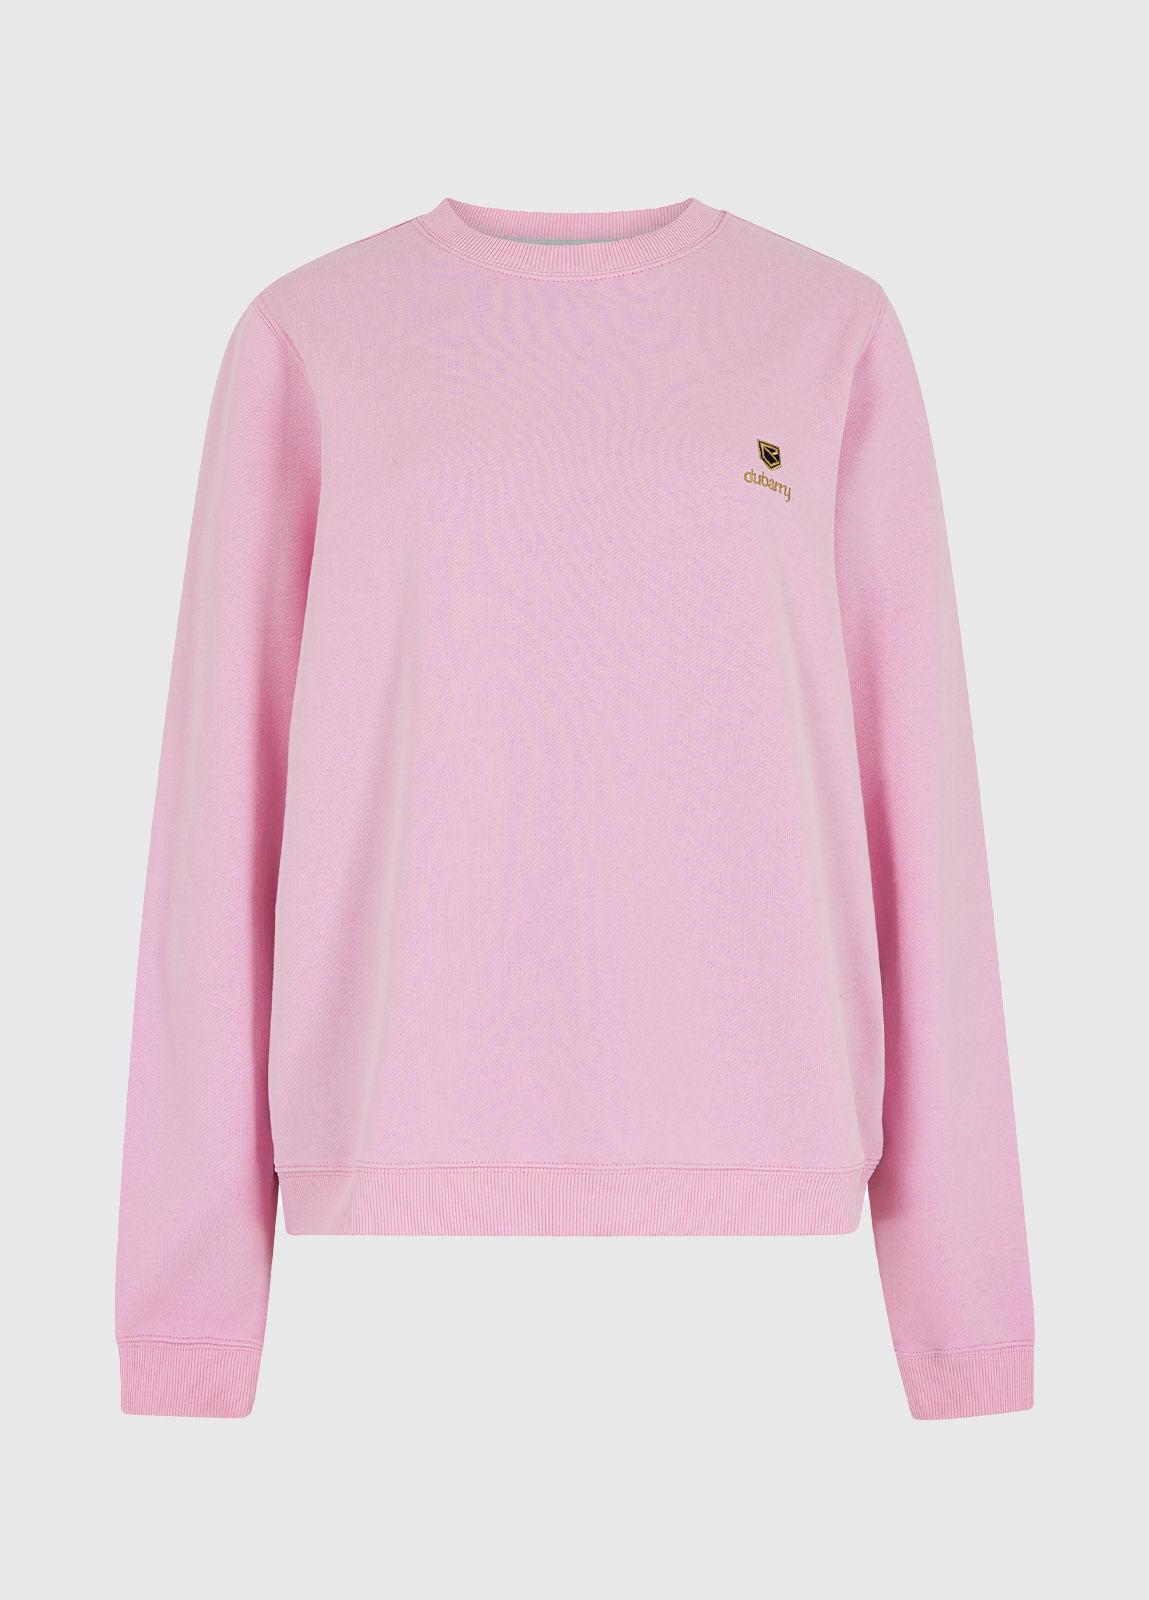 Glenside Sweatshirt Pink